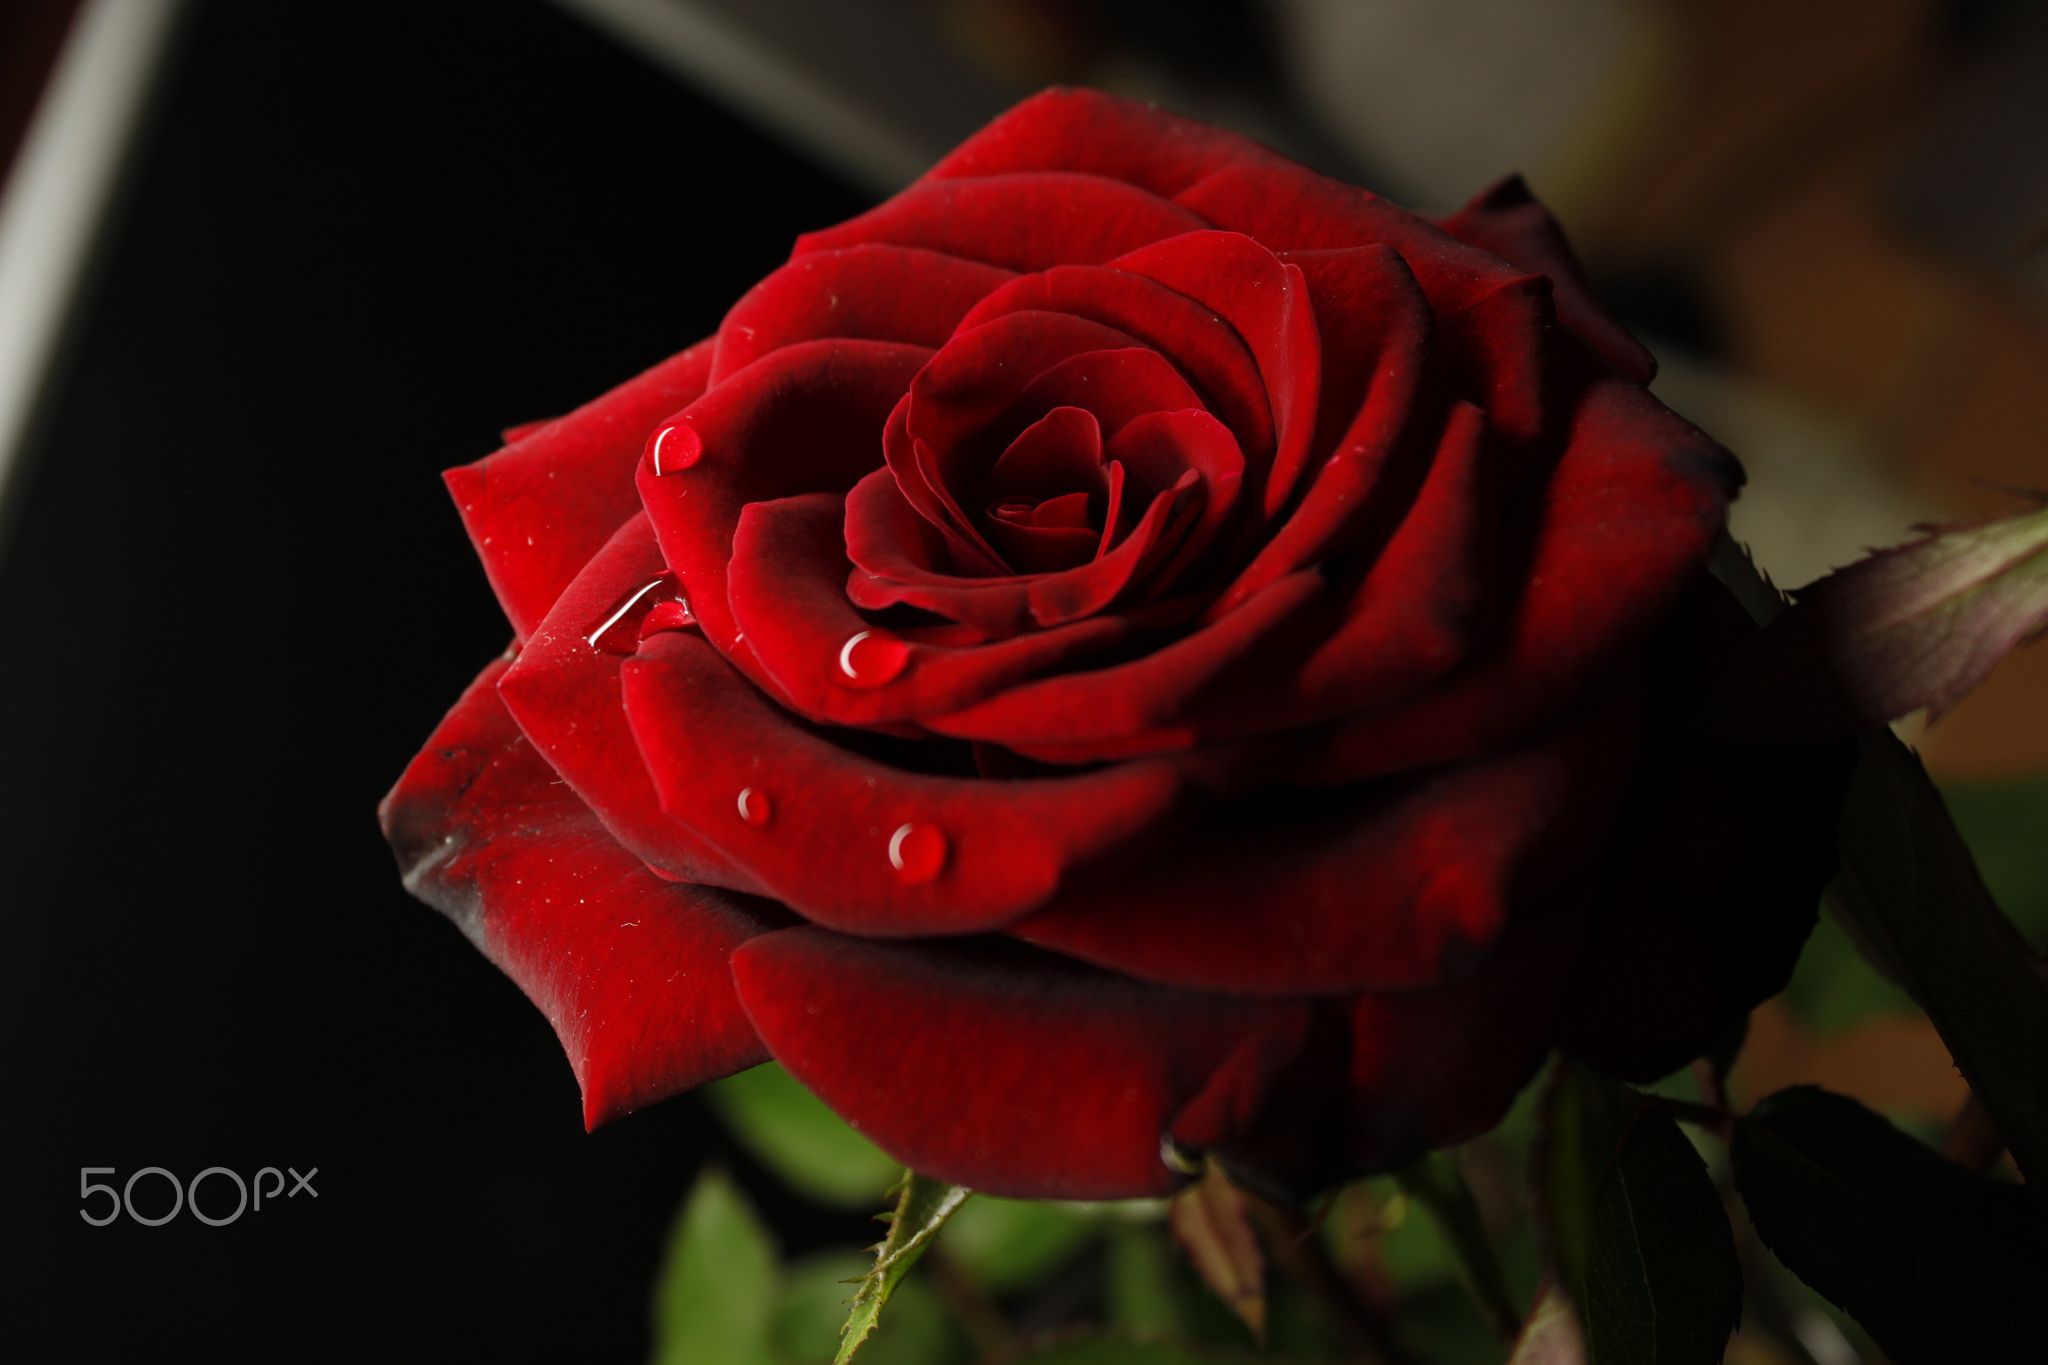 Tears of rose - null | roses | Pinterest | Rose, Beautiful flowers ...